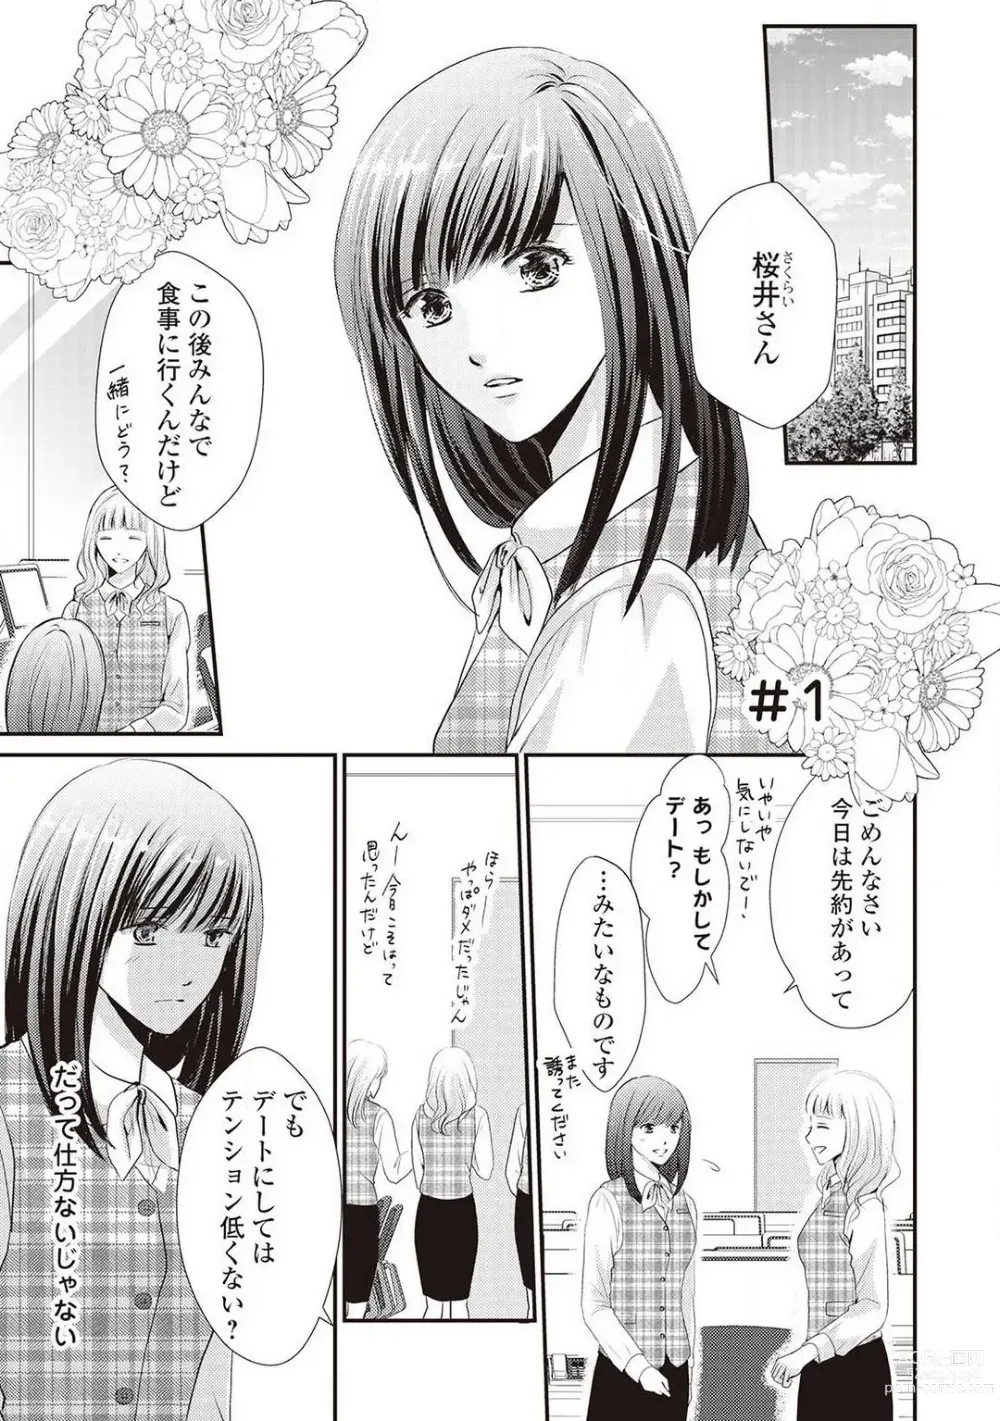 Page 4 of manga Migawari no Konyakusha wa Koi ni Naku.